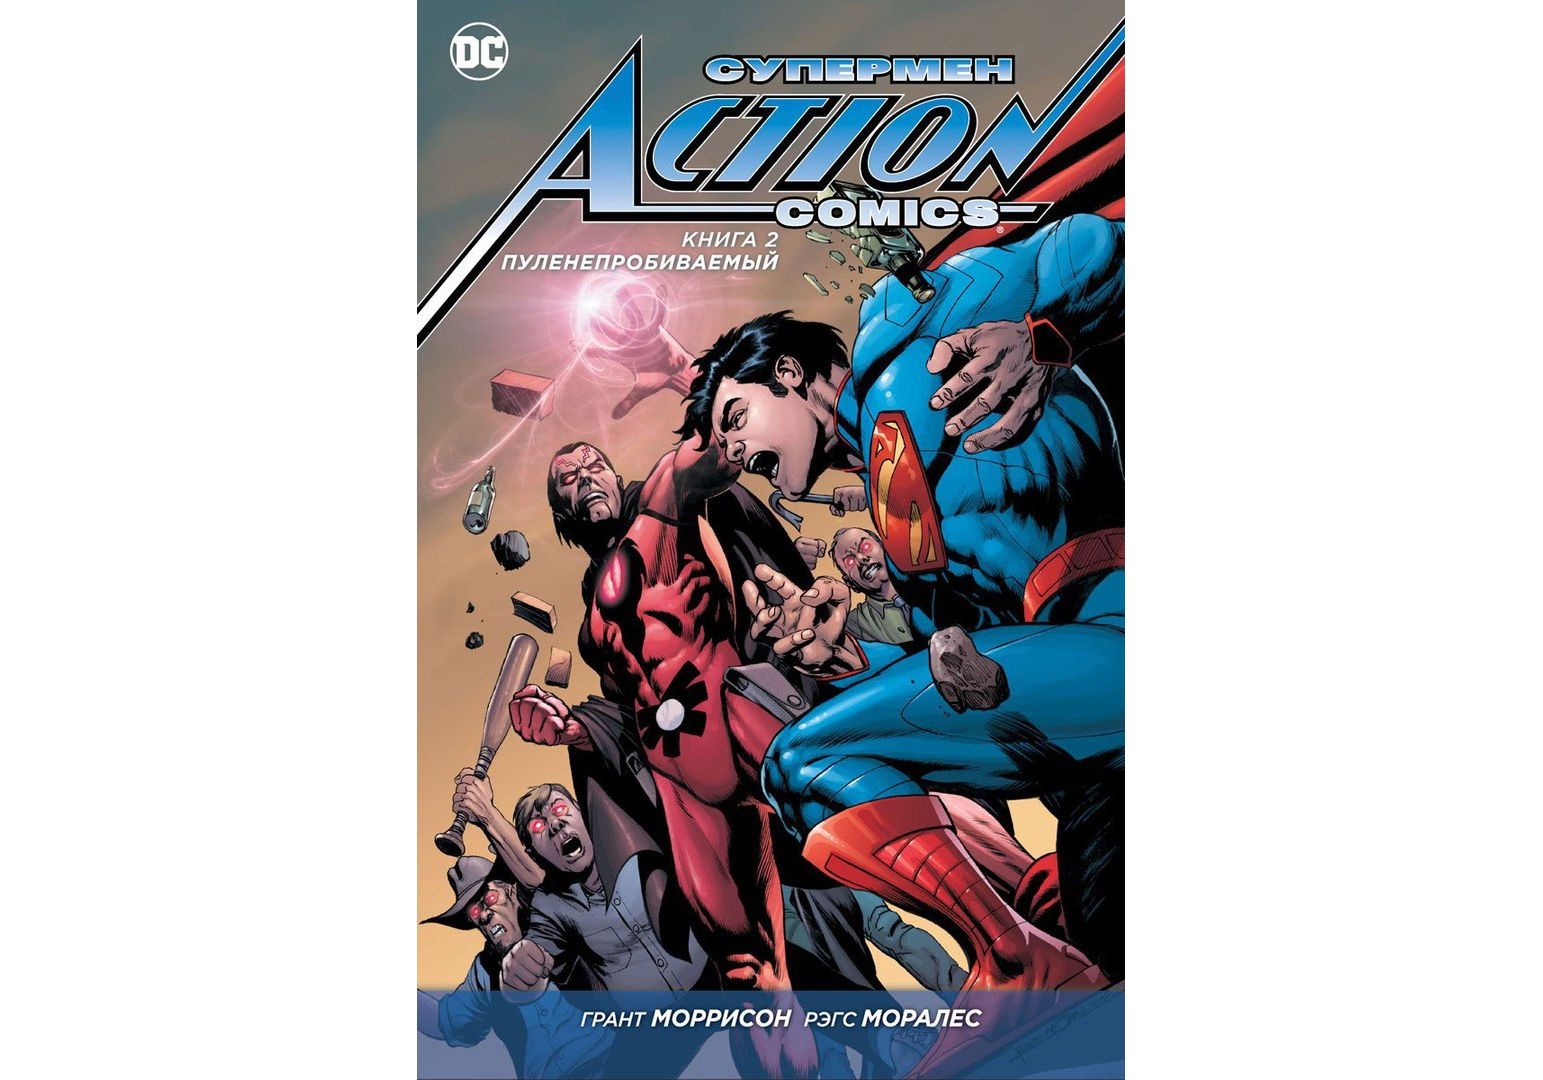 komiks supermen. action comics. kniga 2 puleneprobivaemyj